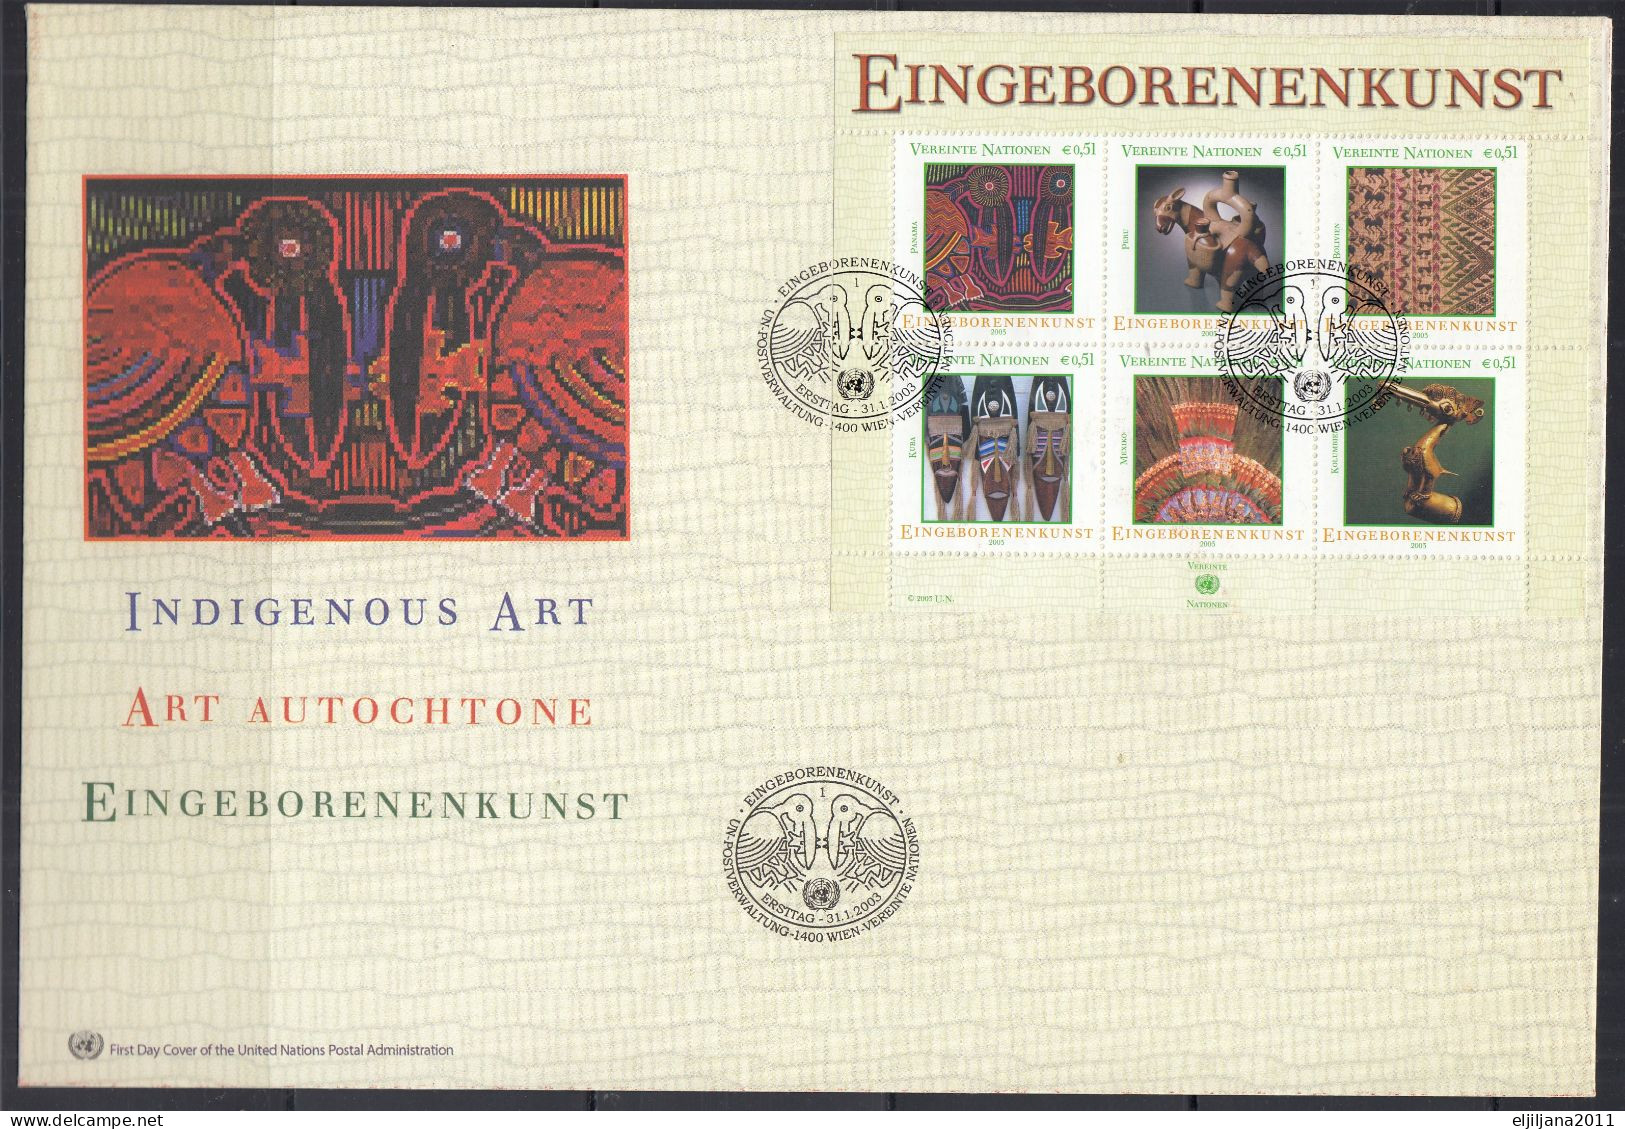 Action !! SALE !! 50 % OFF !! ⁕ UN 2003 Vienna  Indigenous Art / Eingeborenenkunst  XXL FDC Cover - Covers & Documents